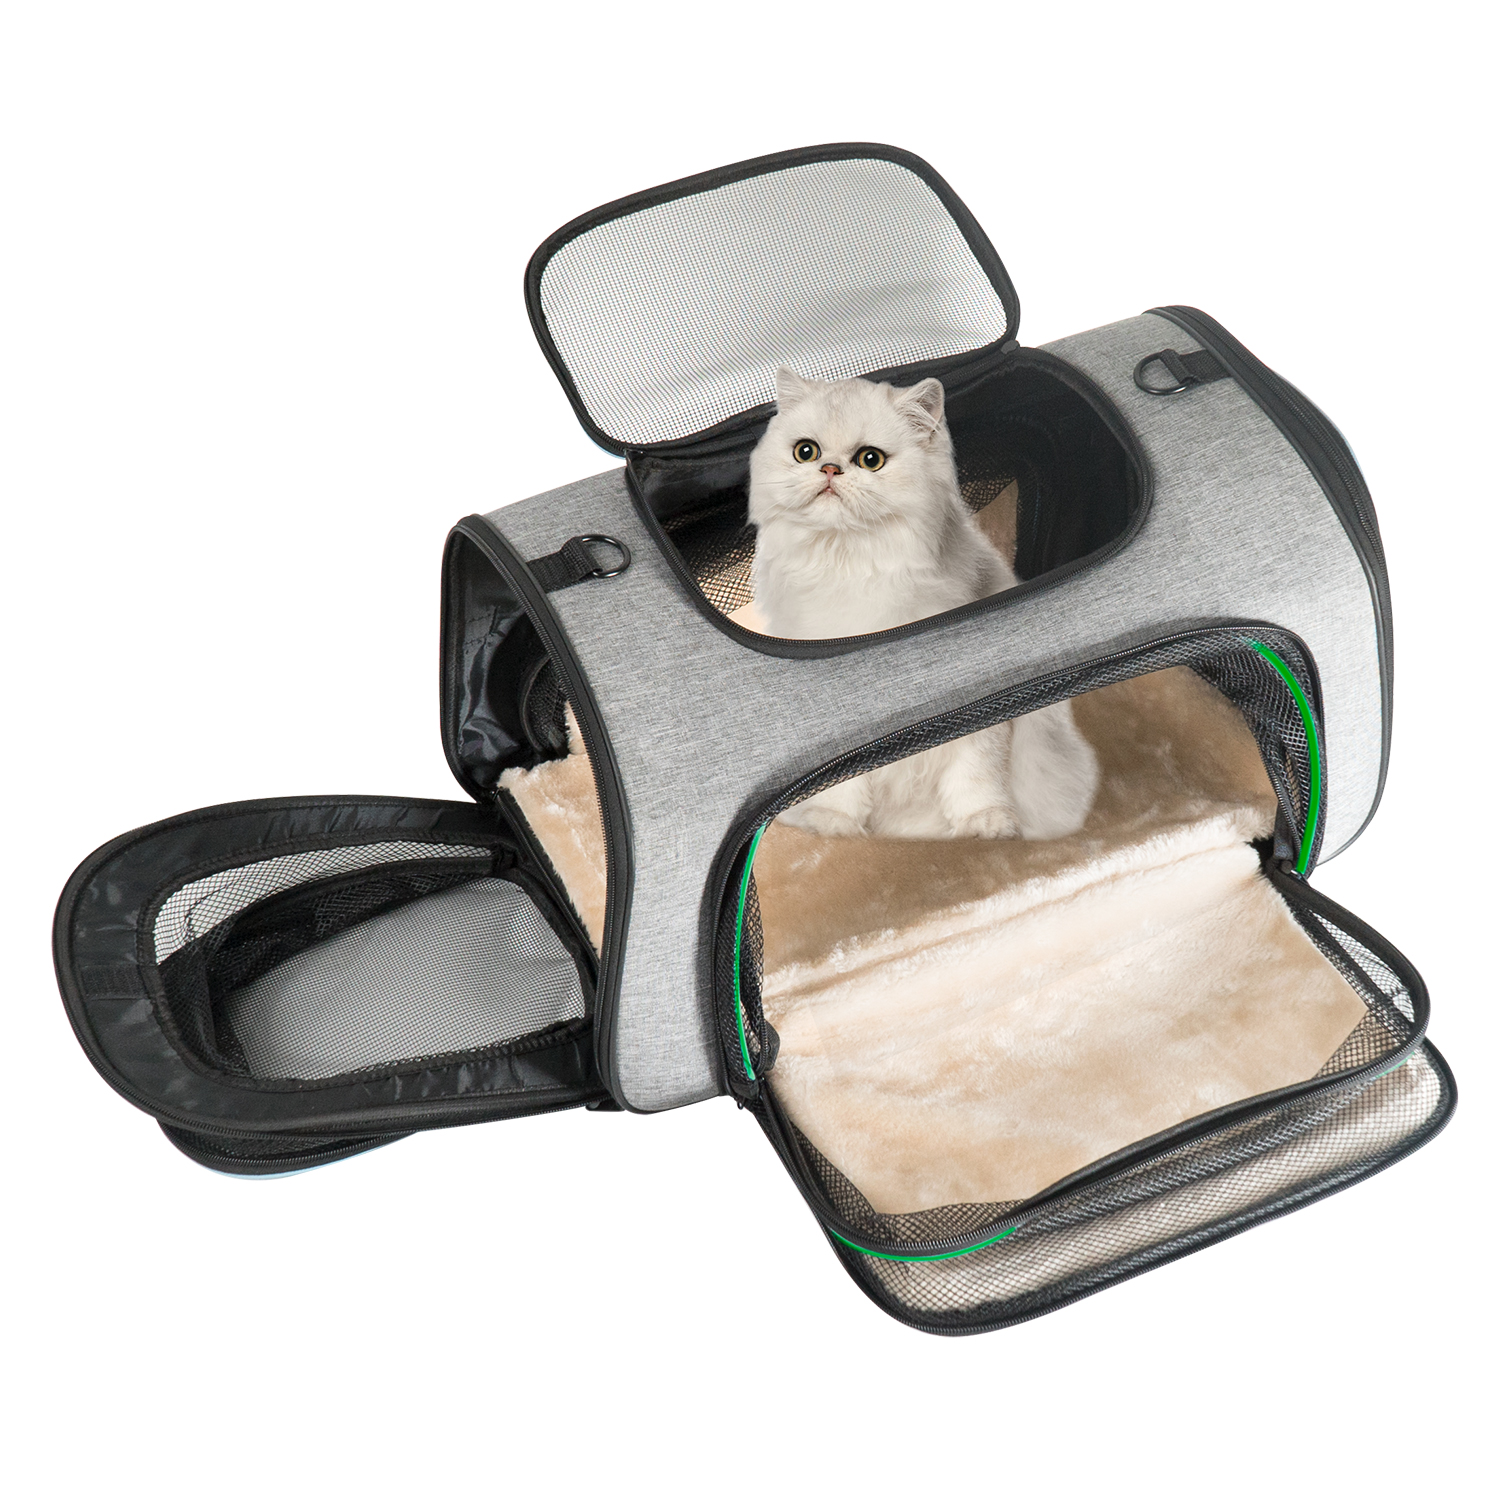 Minthouzペットキャリー 犬 猫 キャリーバッグ キャリー・カート 拡張可能 通気性 折りたたみ | WAVLINKダイレクト楽天市場店